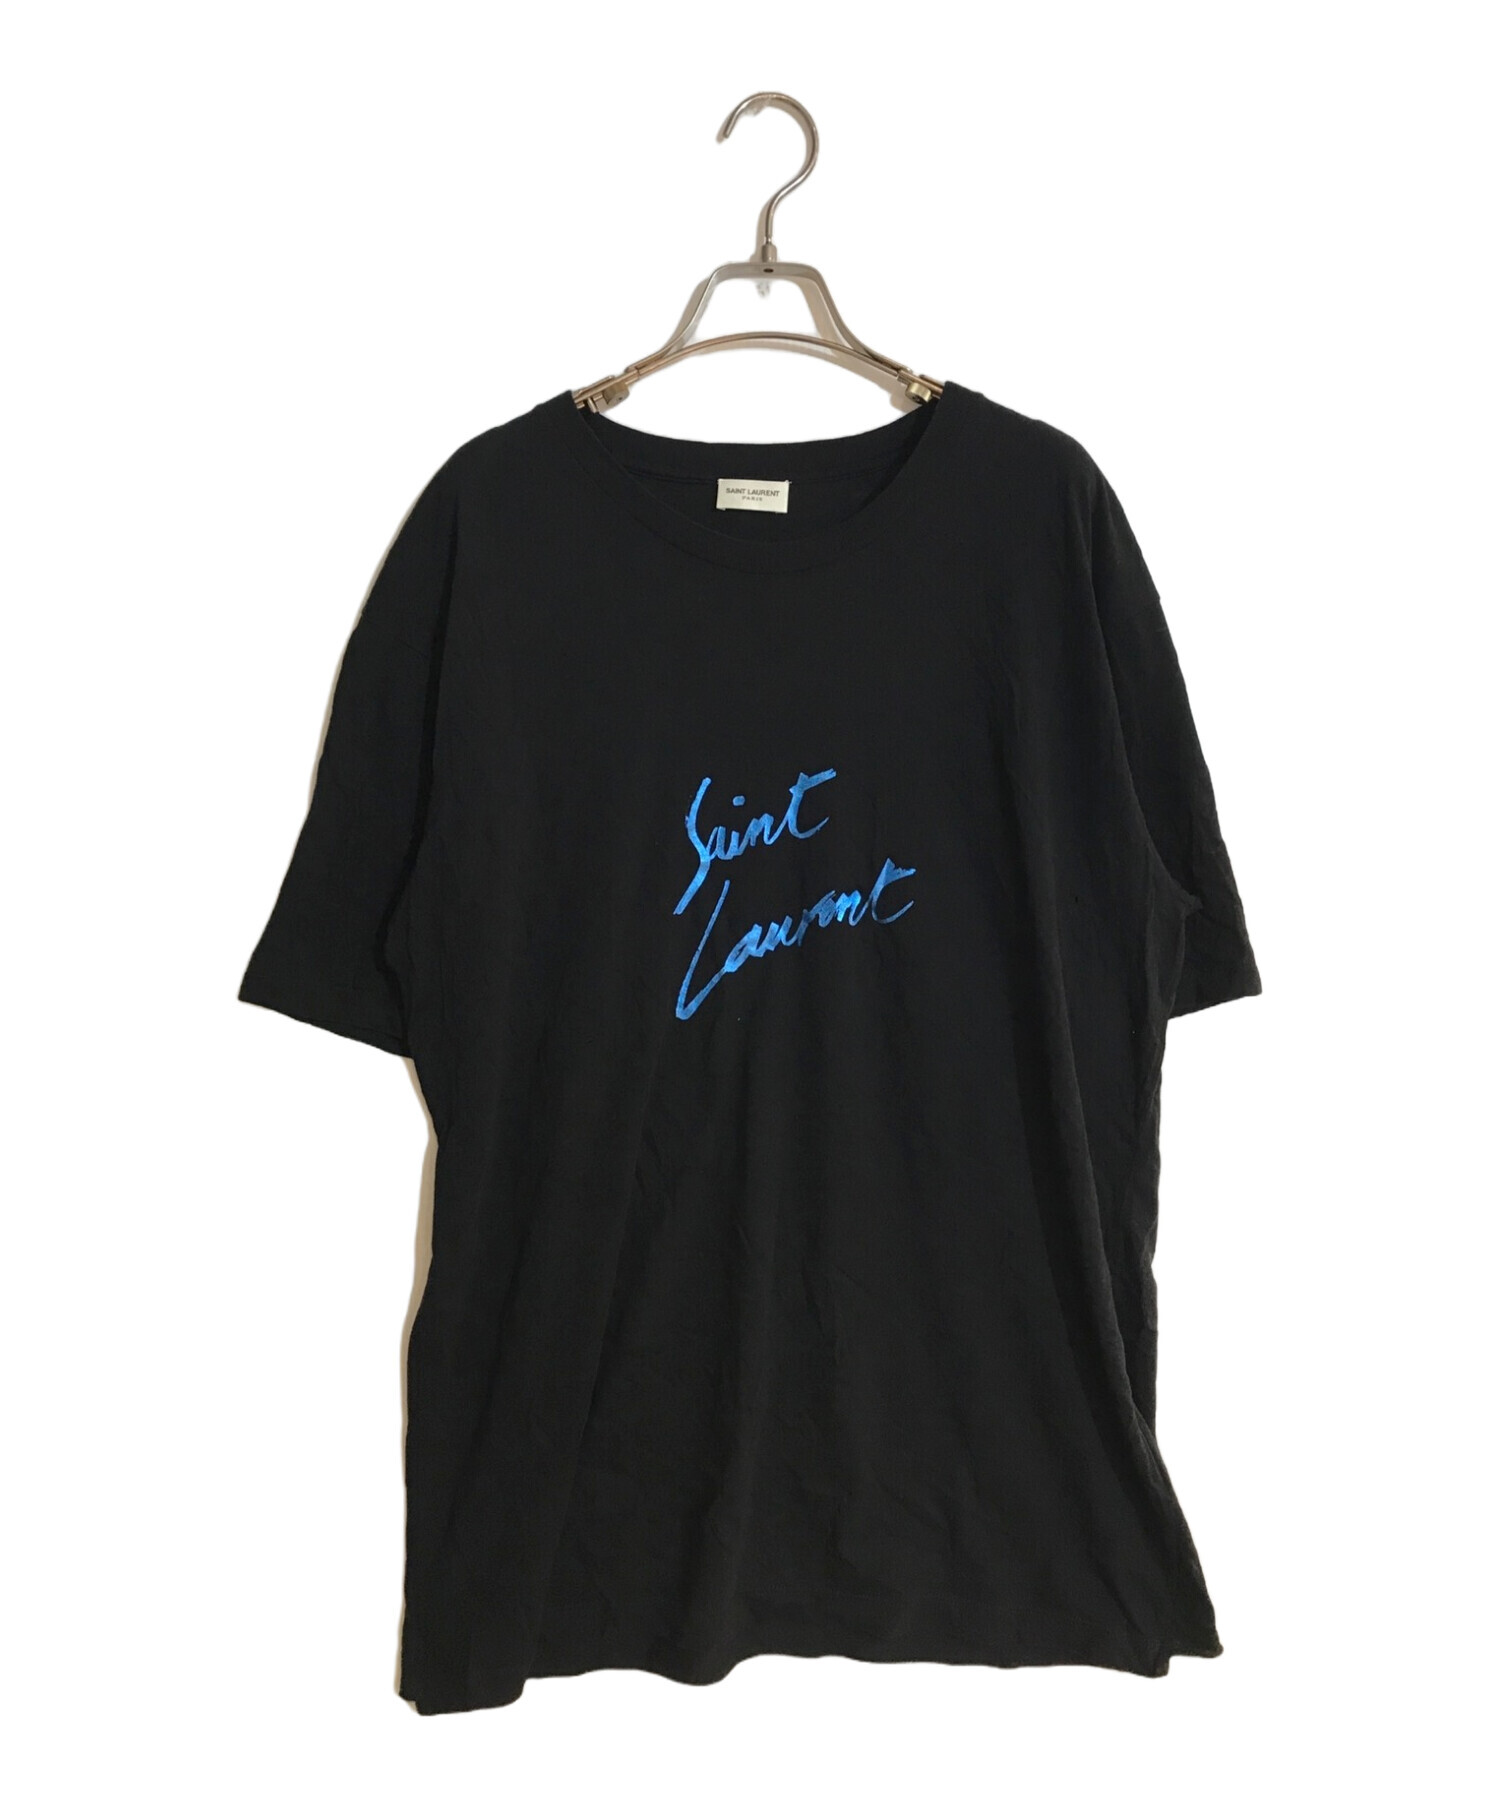 Saint Laurent Paris (サンローランパリ) ロゴプリントTシャツ ブラック サイズ:SIZE M